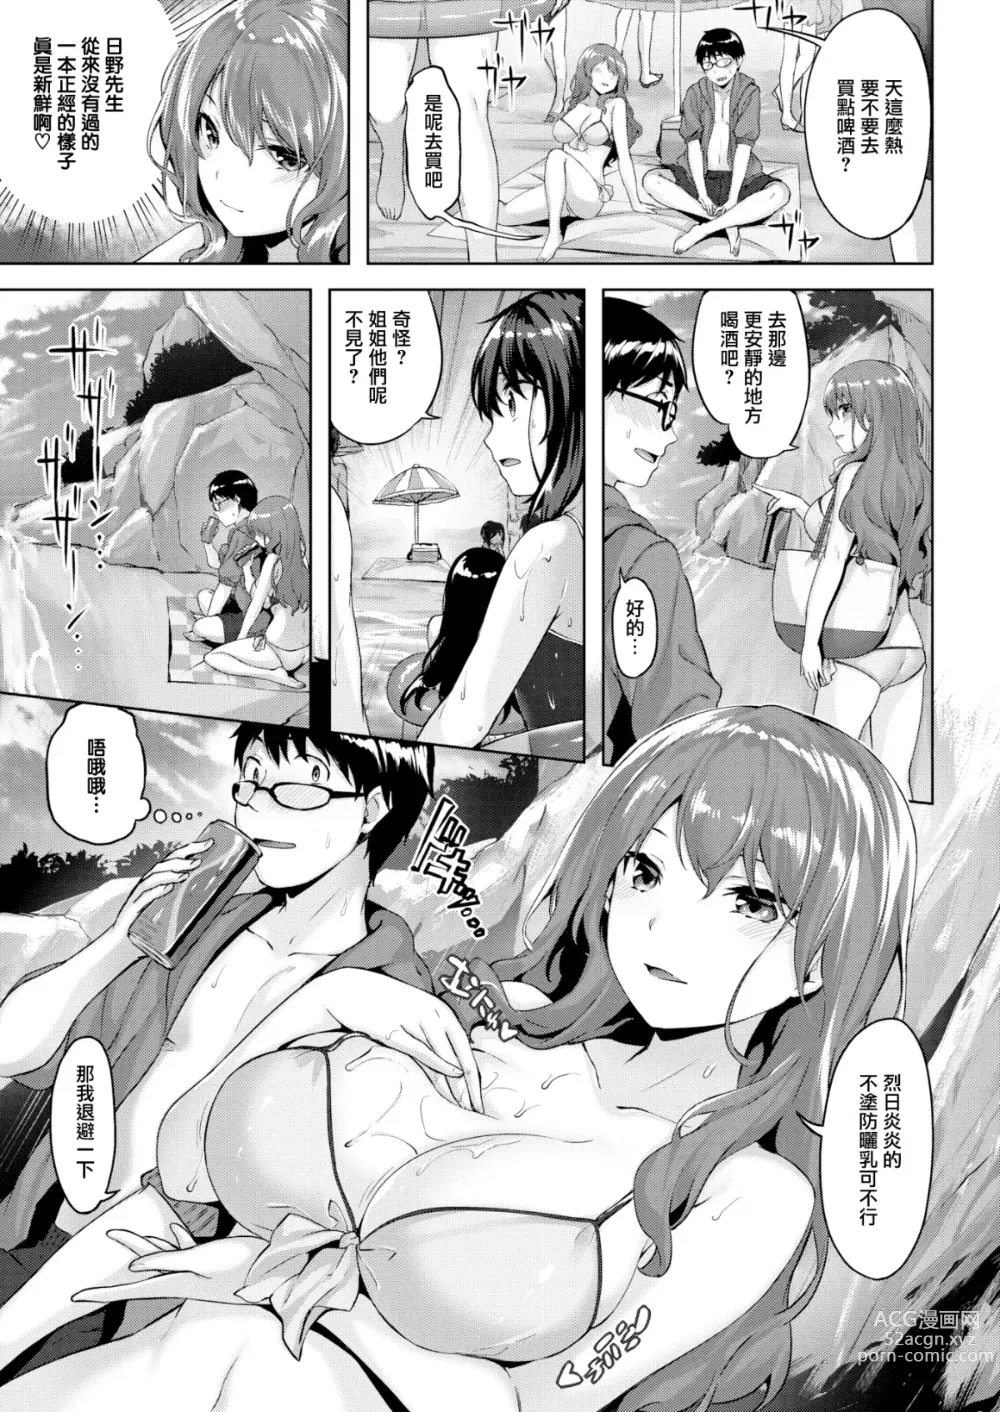 Page 10 of manga Nureta Hana no Nioi - Scent of Wet Flower (uncensored)